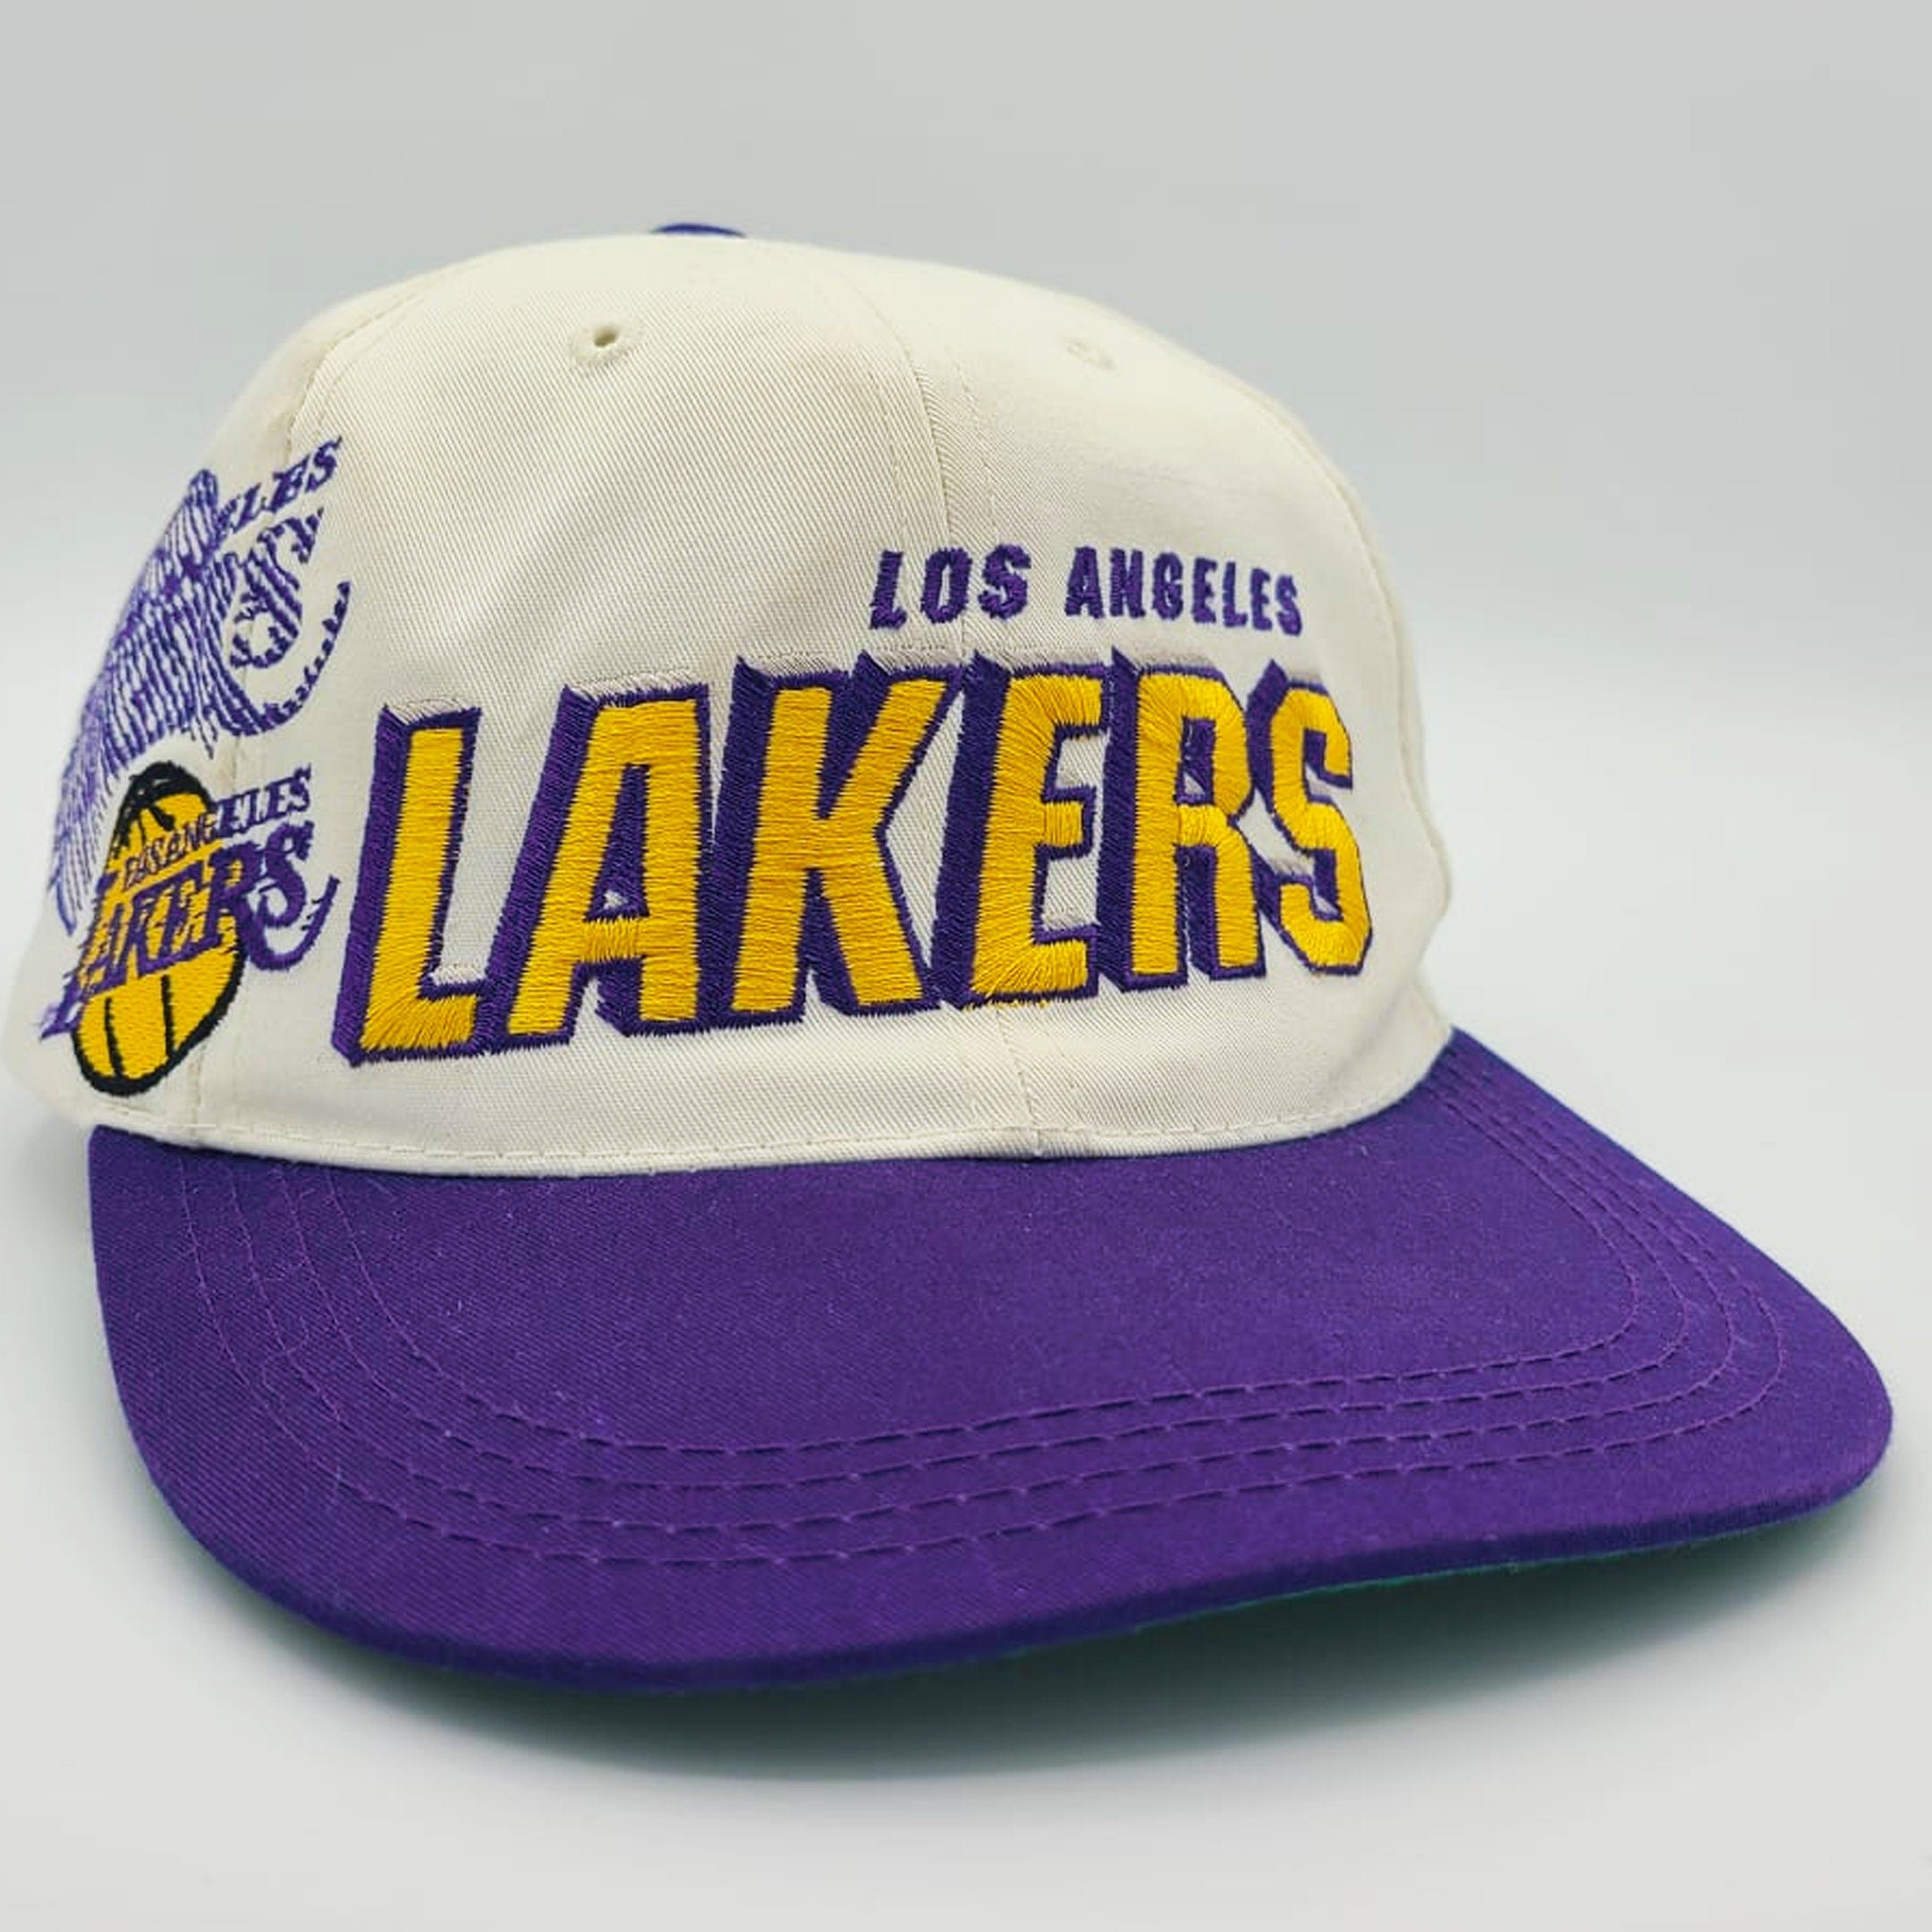 VINTAGE 90s NBA LOS ANGELES LAKERS SNAPBACK HAT THE GAME